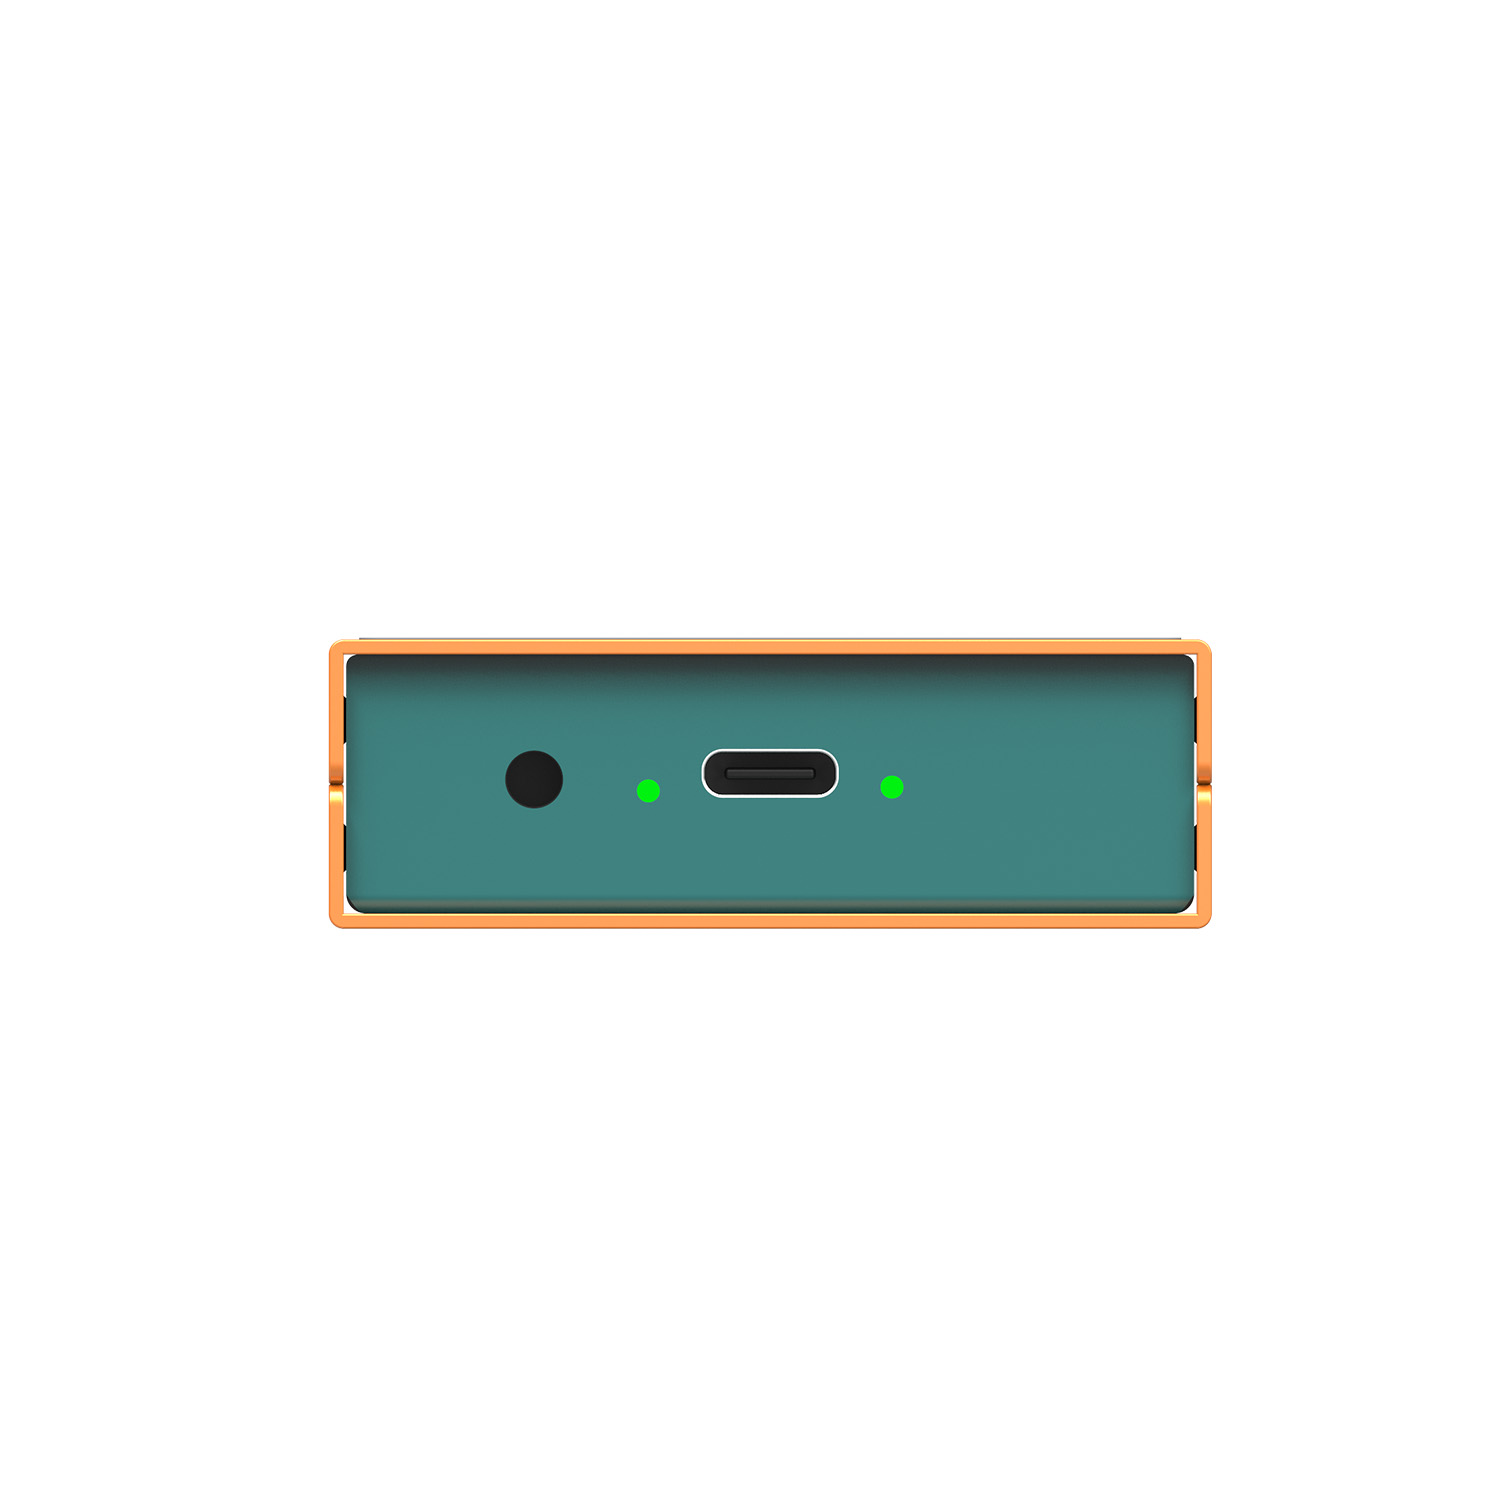 UC1218 | HDMI to USBビデオキャプチャー | AVMATRIX